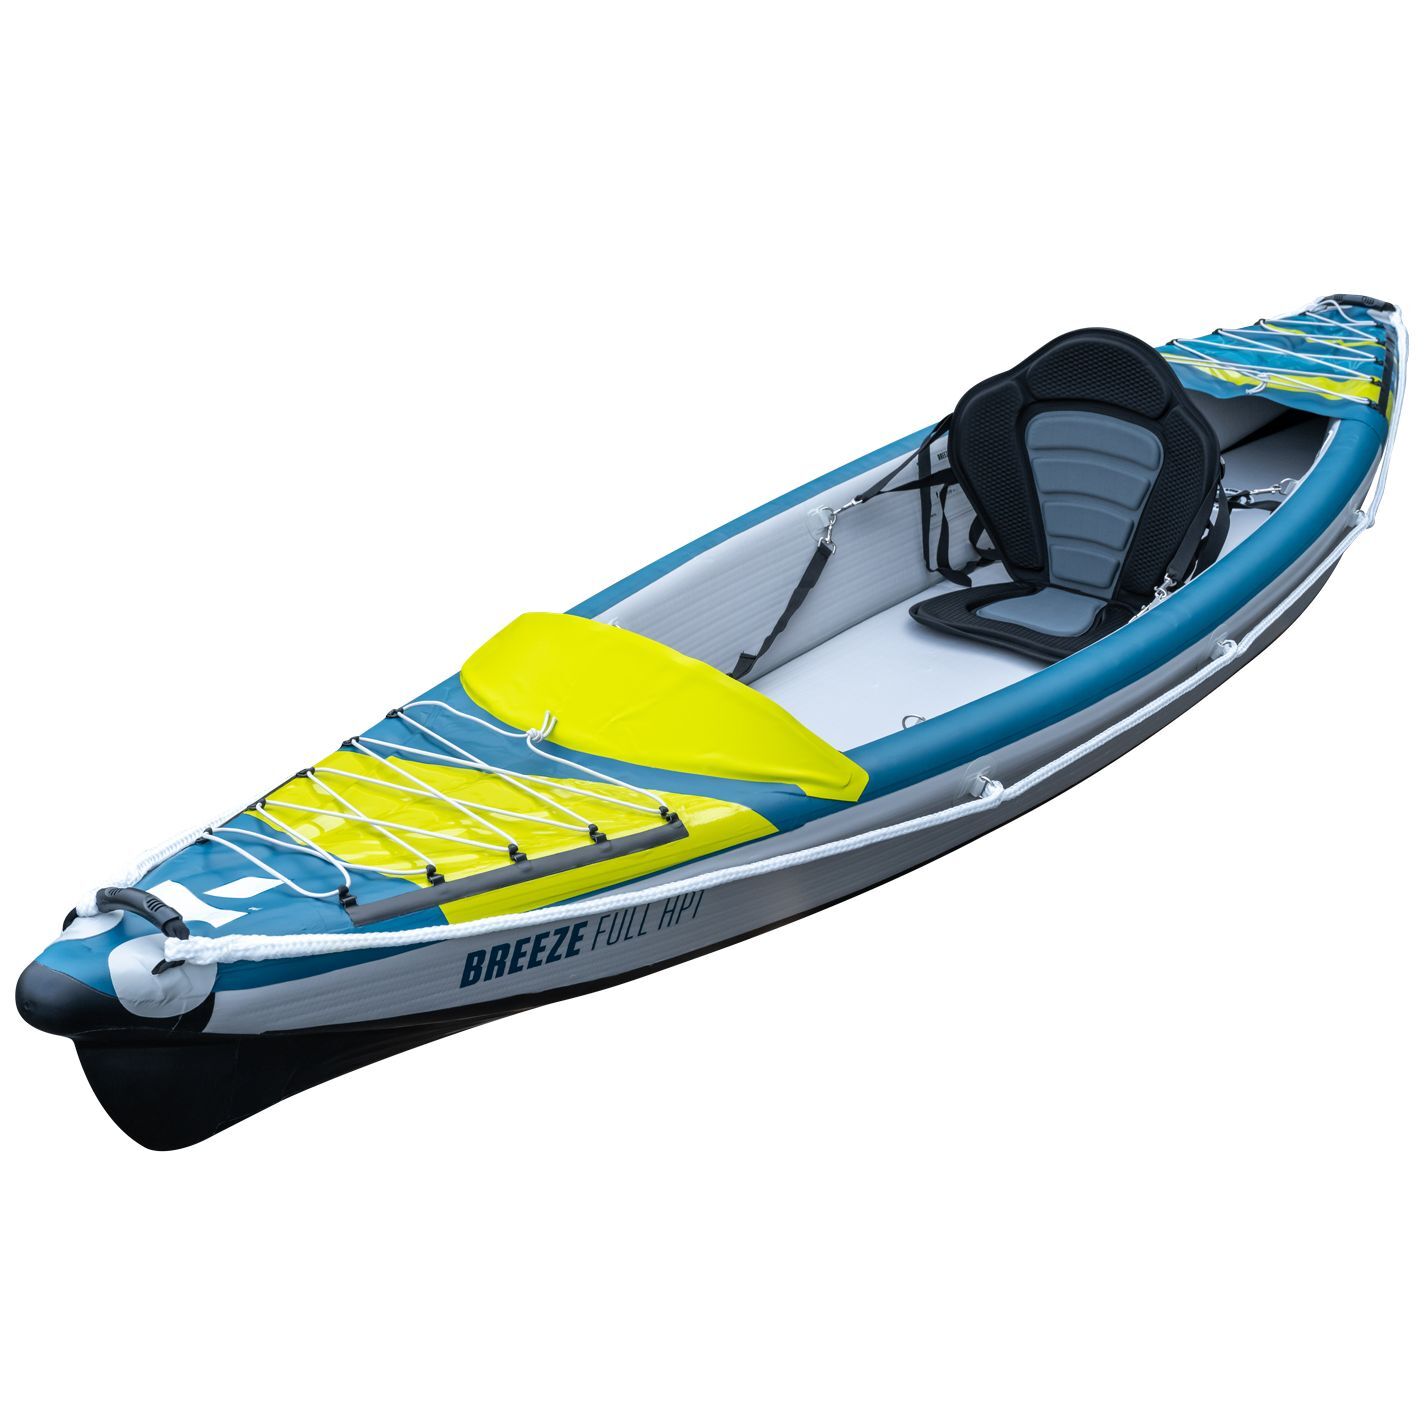 Tahe Outdoor Kayak Air Breeze Full Hp1 - Oppustelig kajak